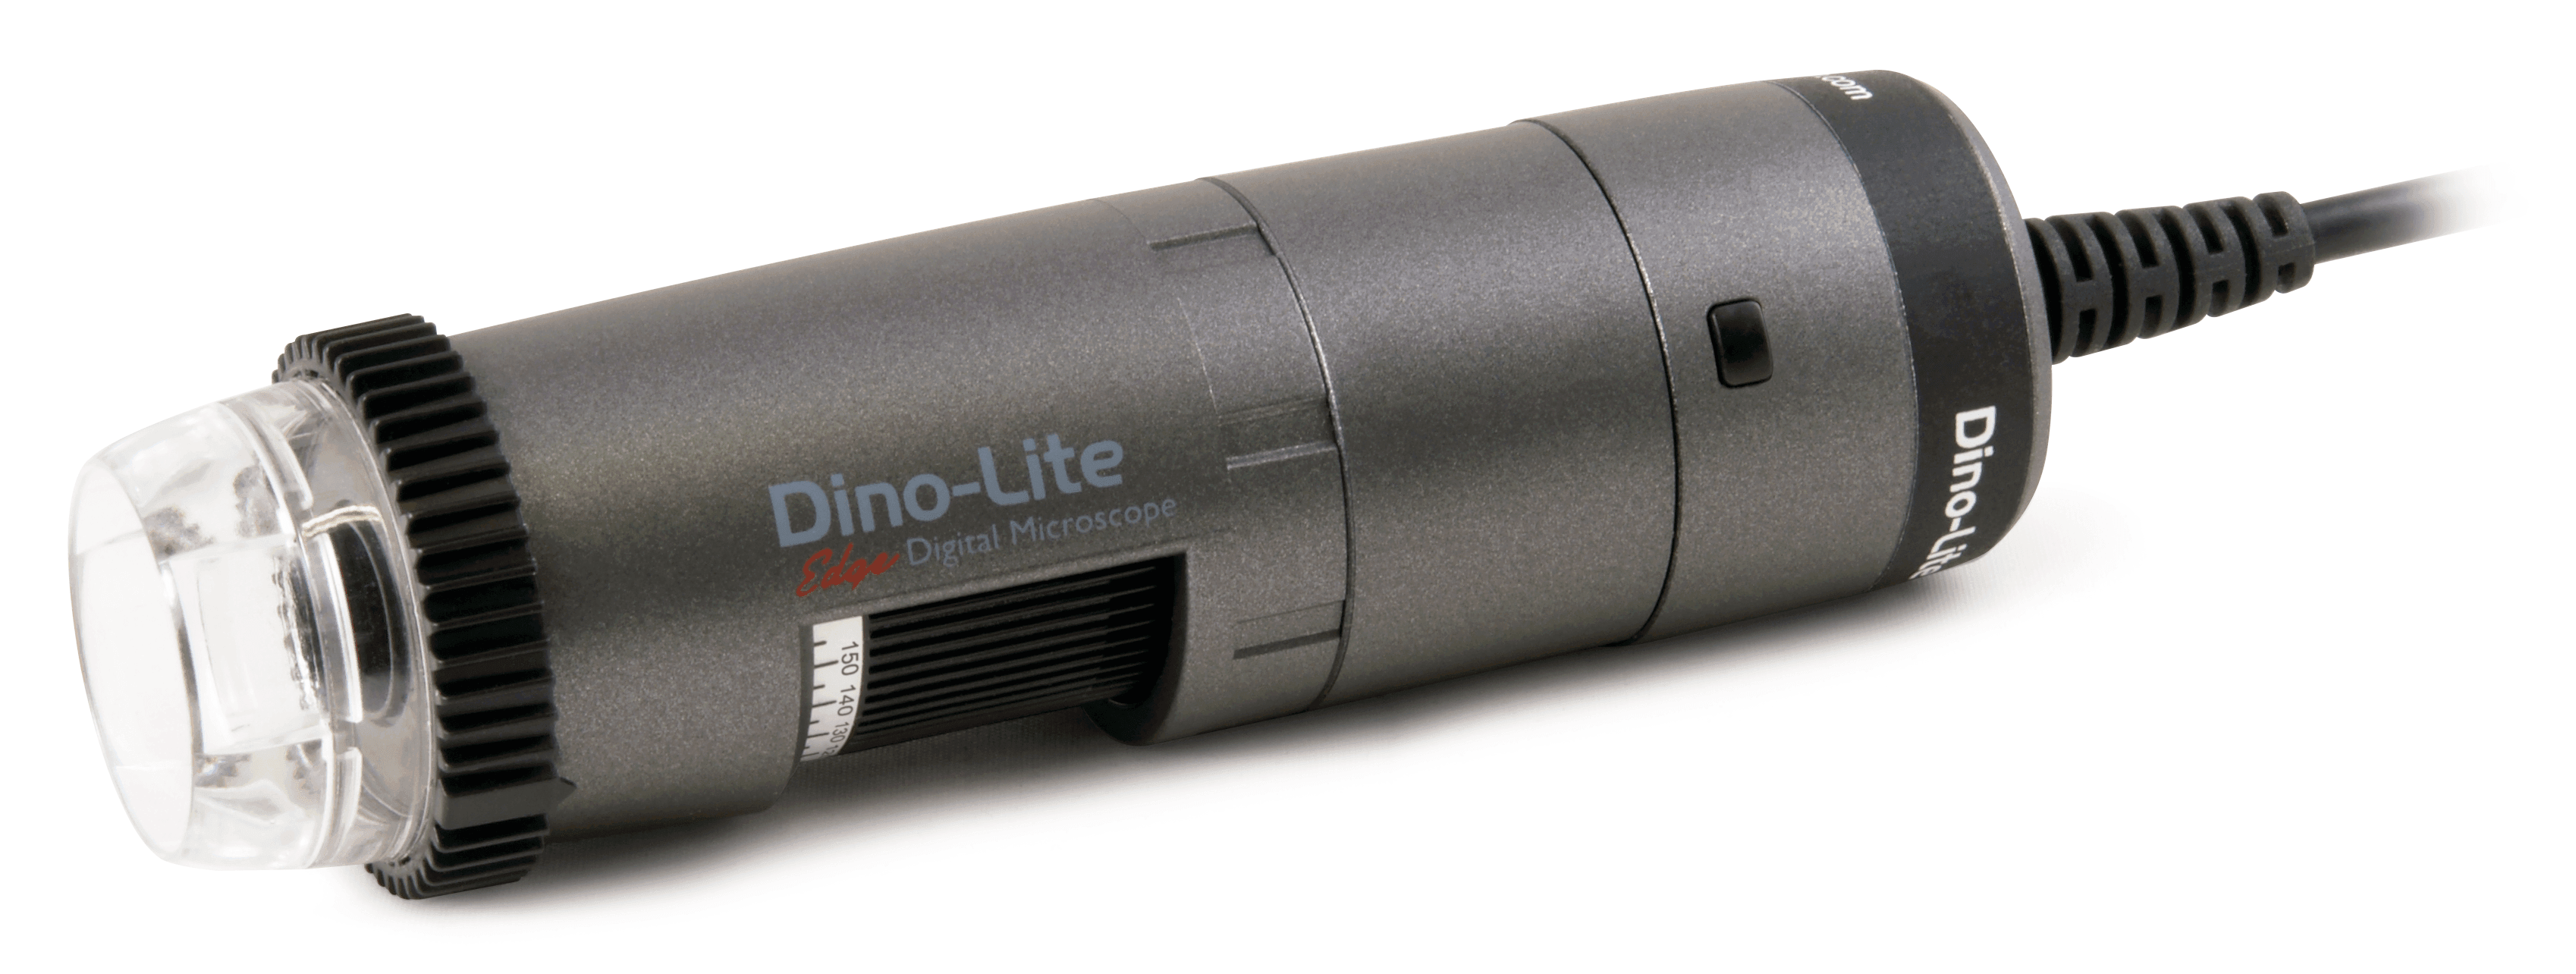 DINO-LITE AF4115ZTL EDGE DIGITAL MICROSCOPE USB - LWD1.3MP, 10-140X, LWD,  POLARIZER, FLC